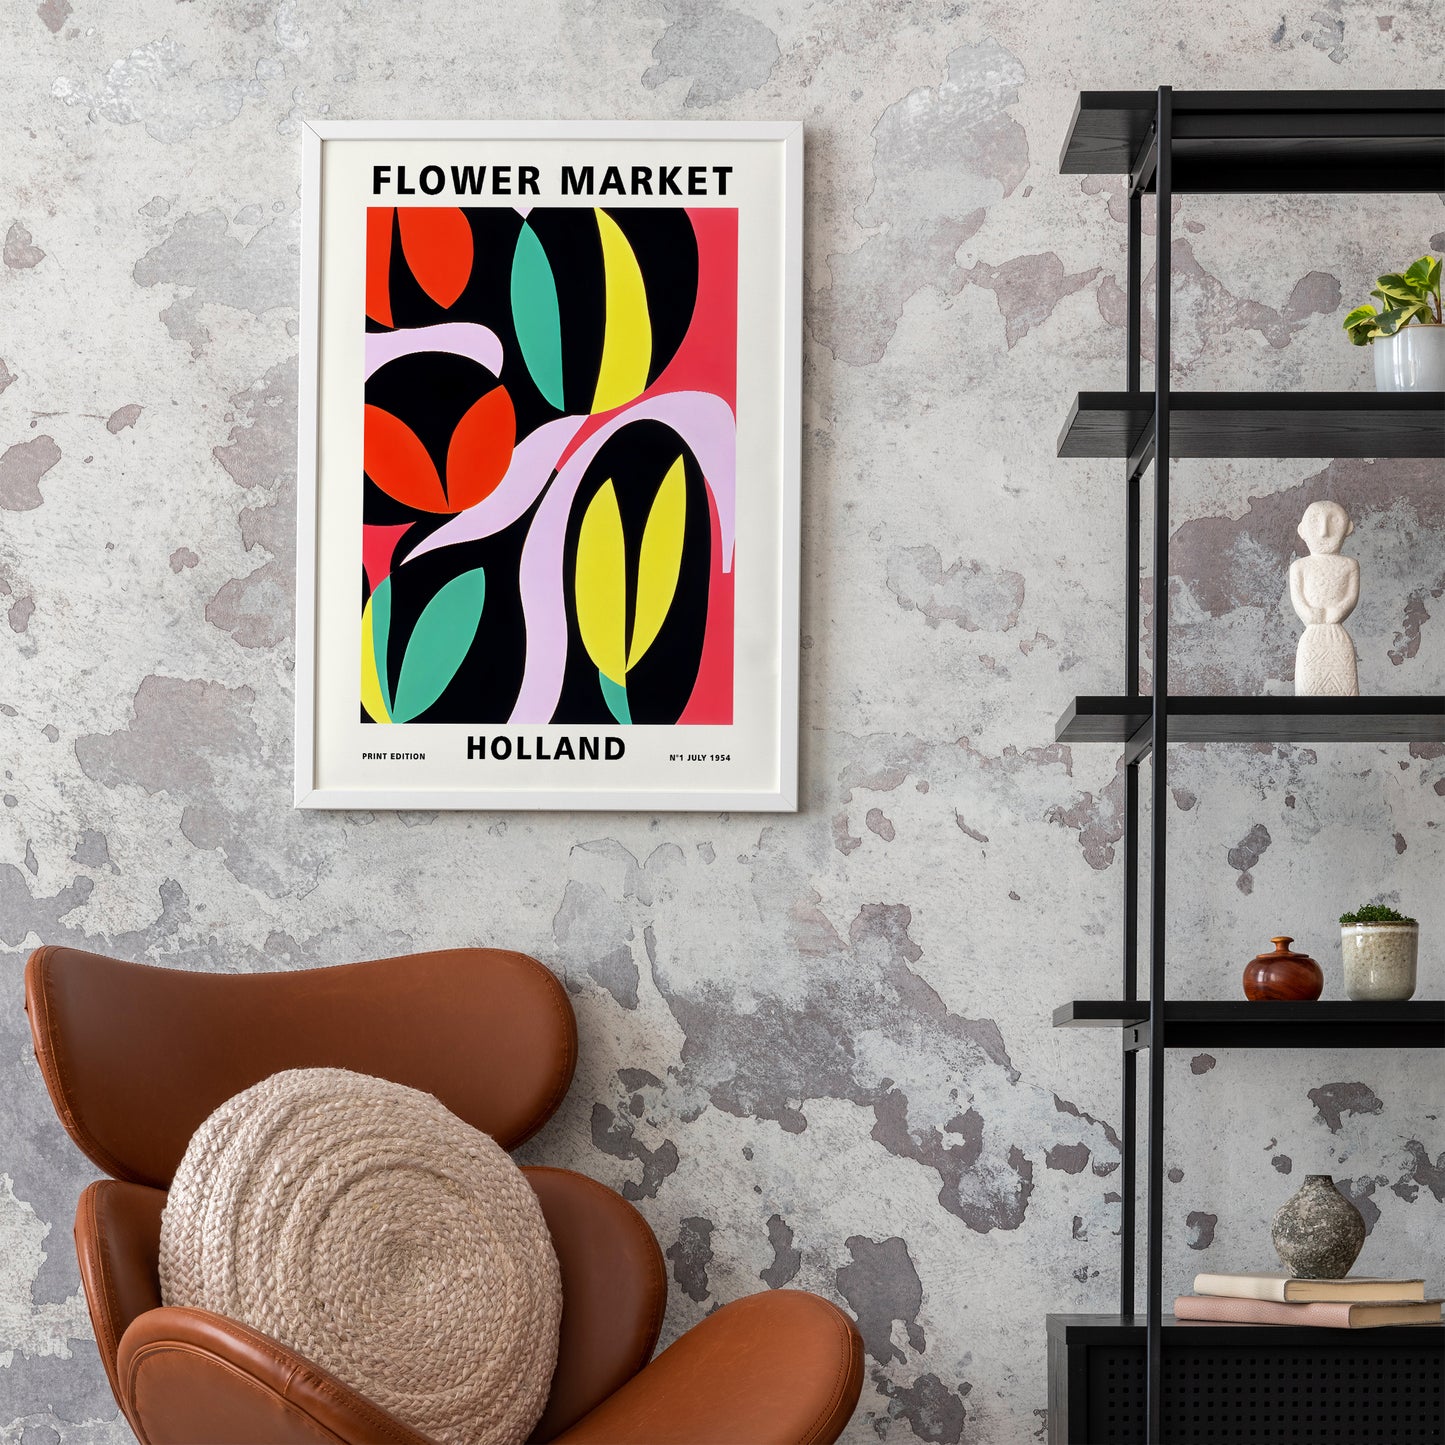 Holland Flower Market Poster